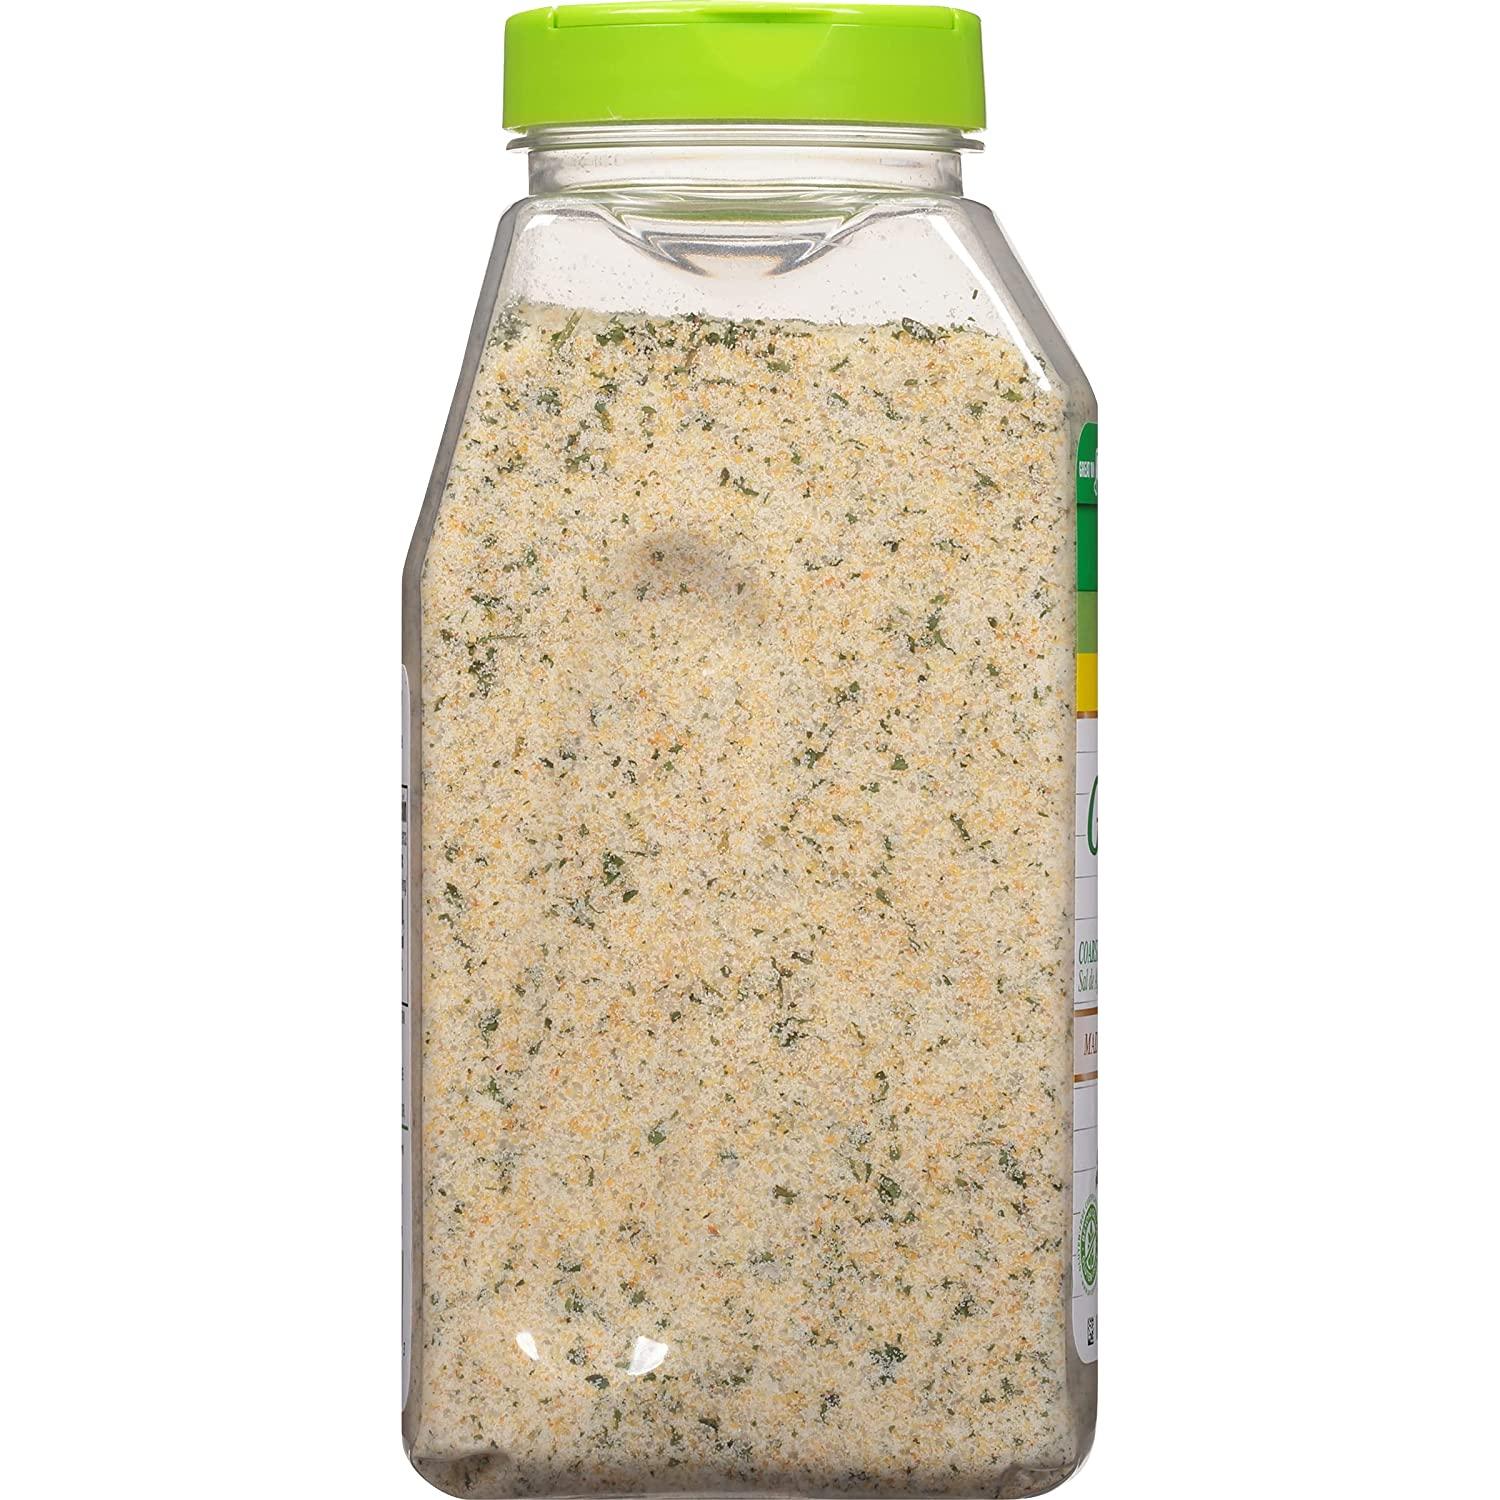 Lawry's Casero Garlic Salt, 33 Ounce